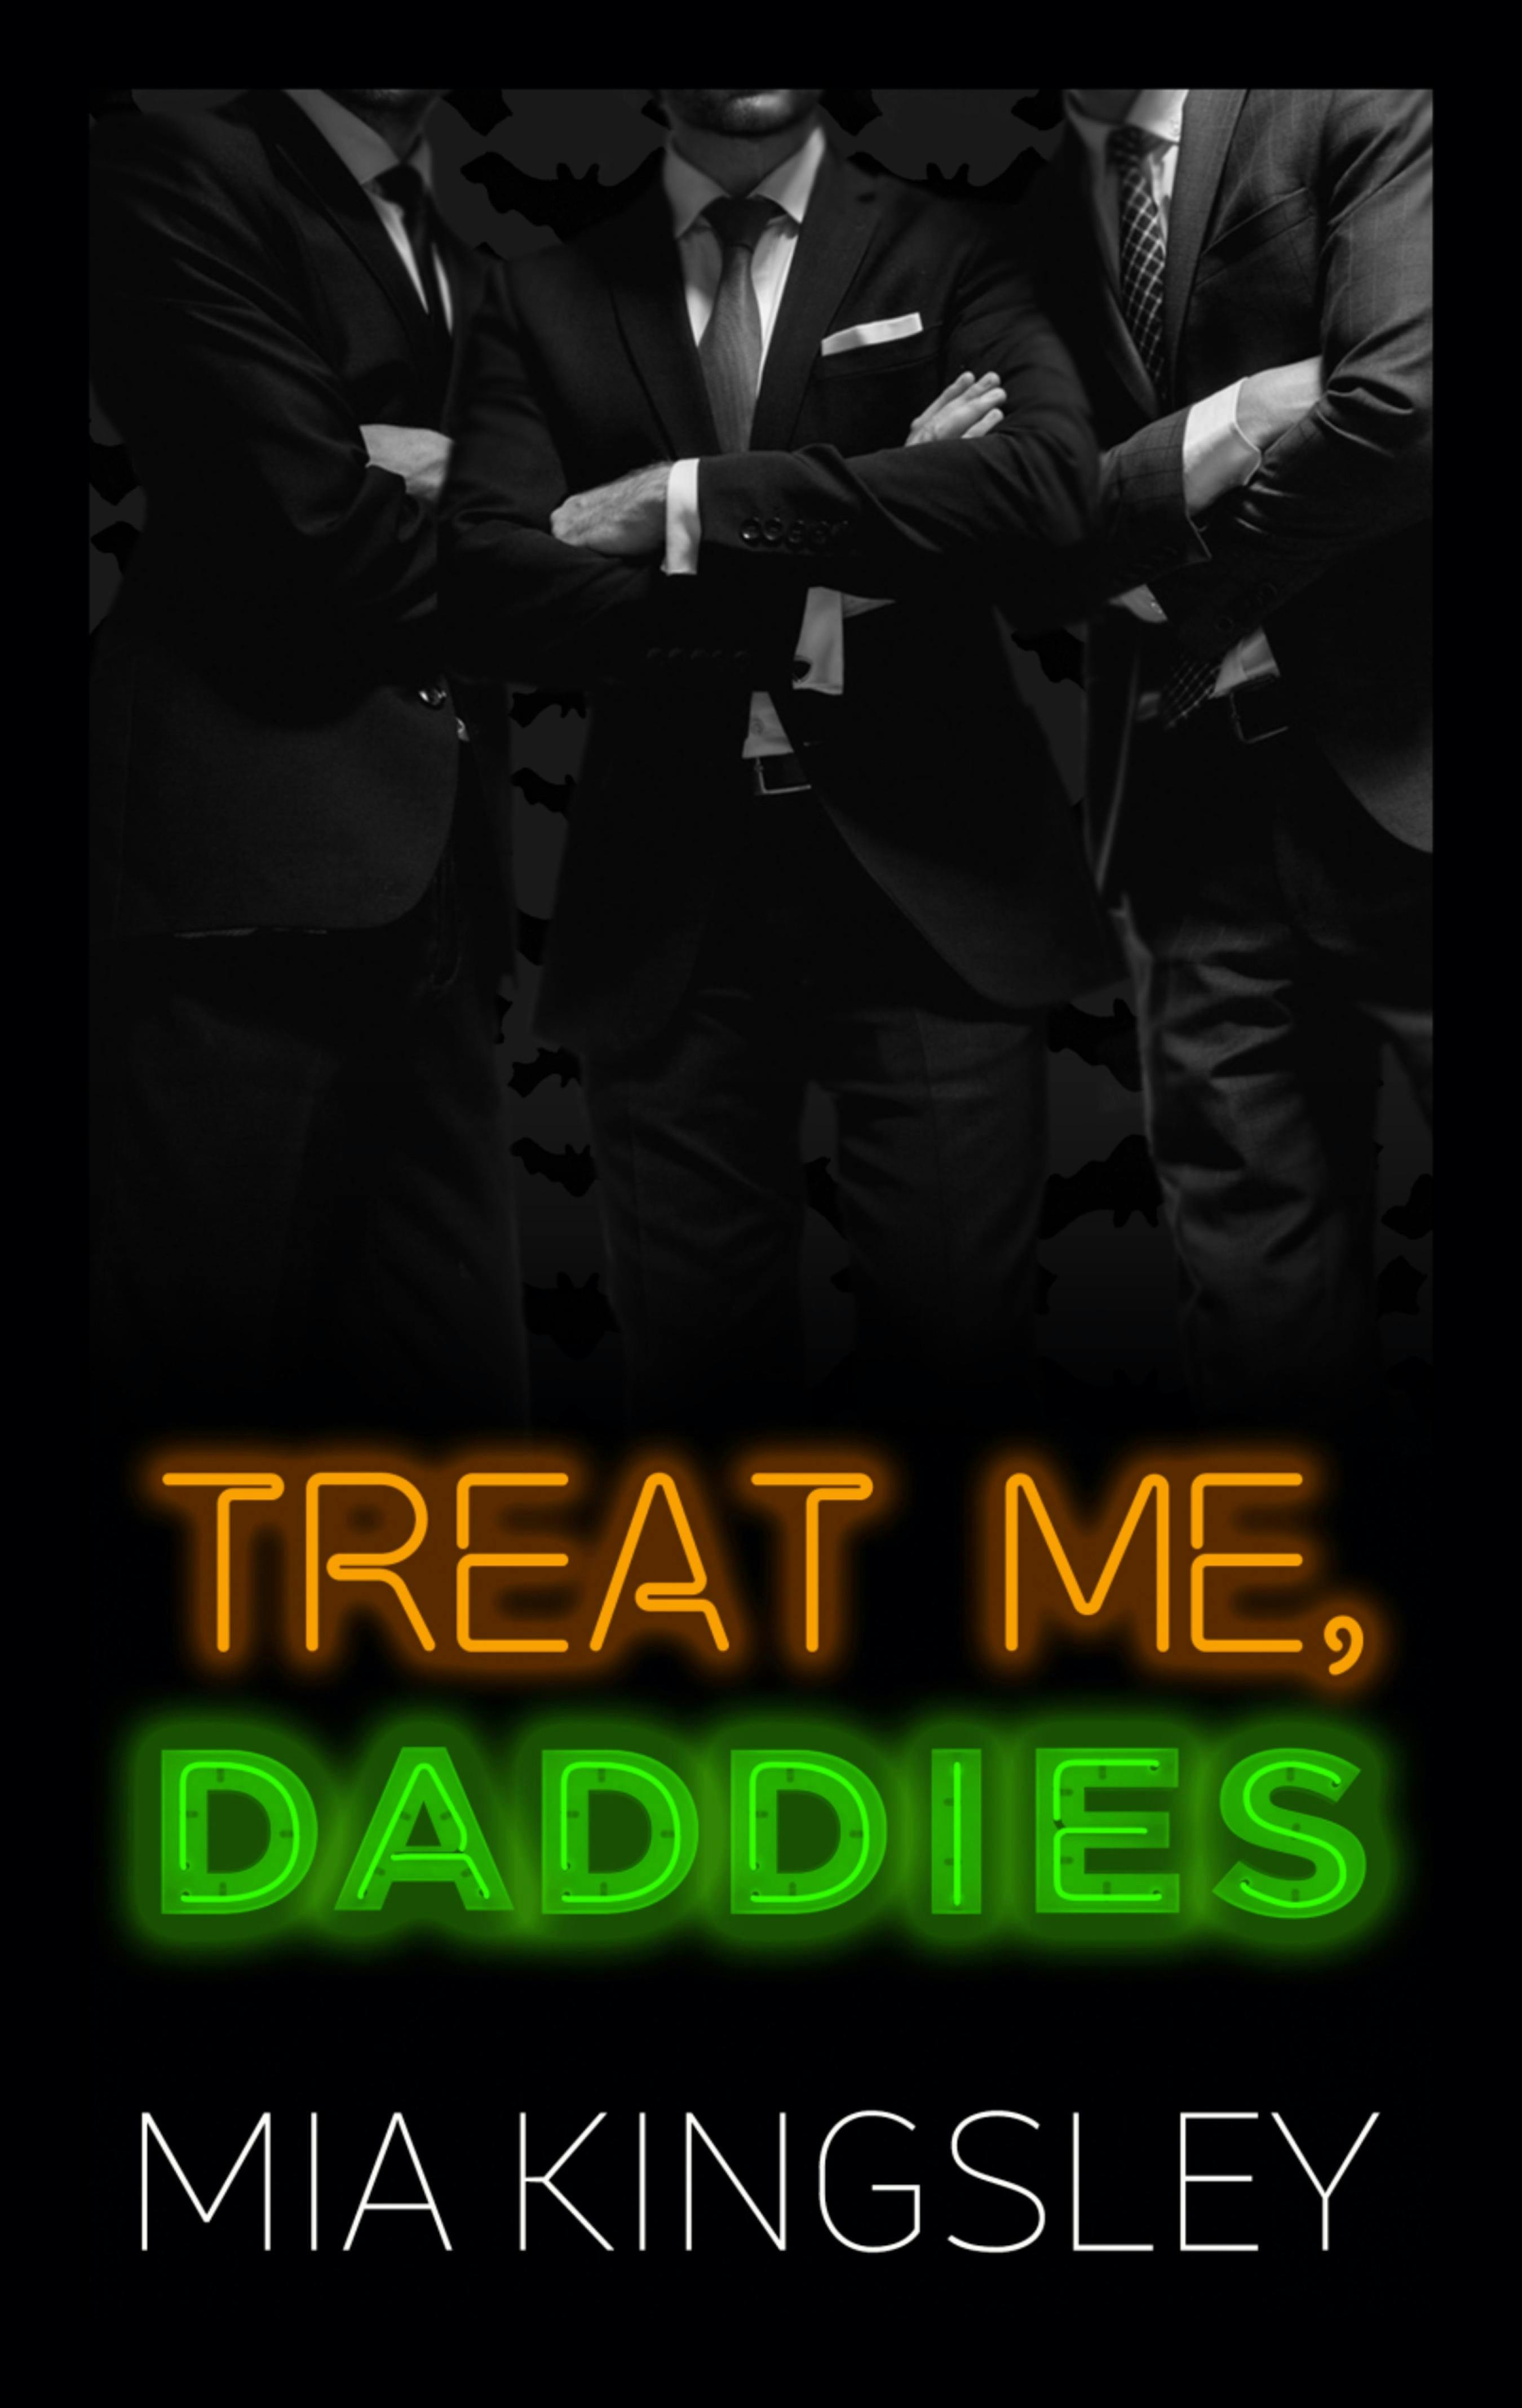 Treat Me, Daddies - Mia Kingsley